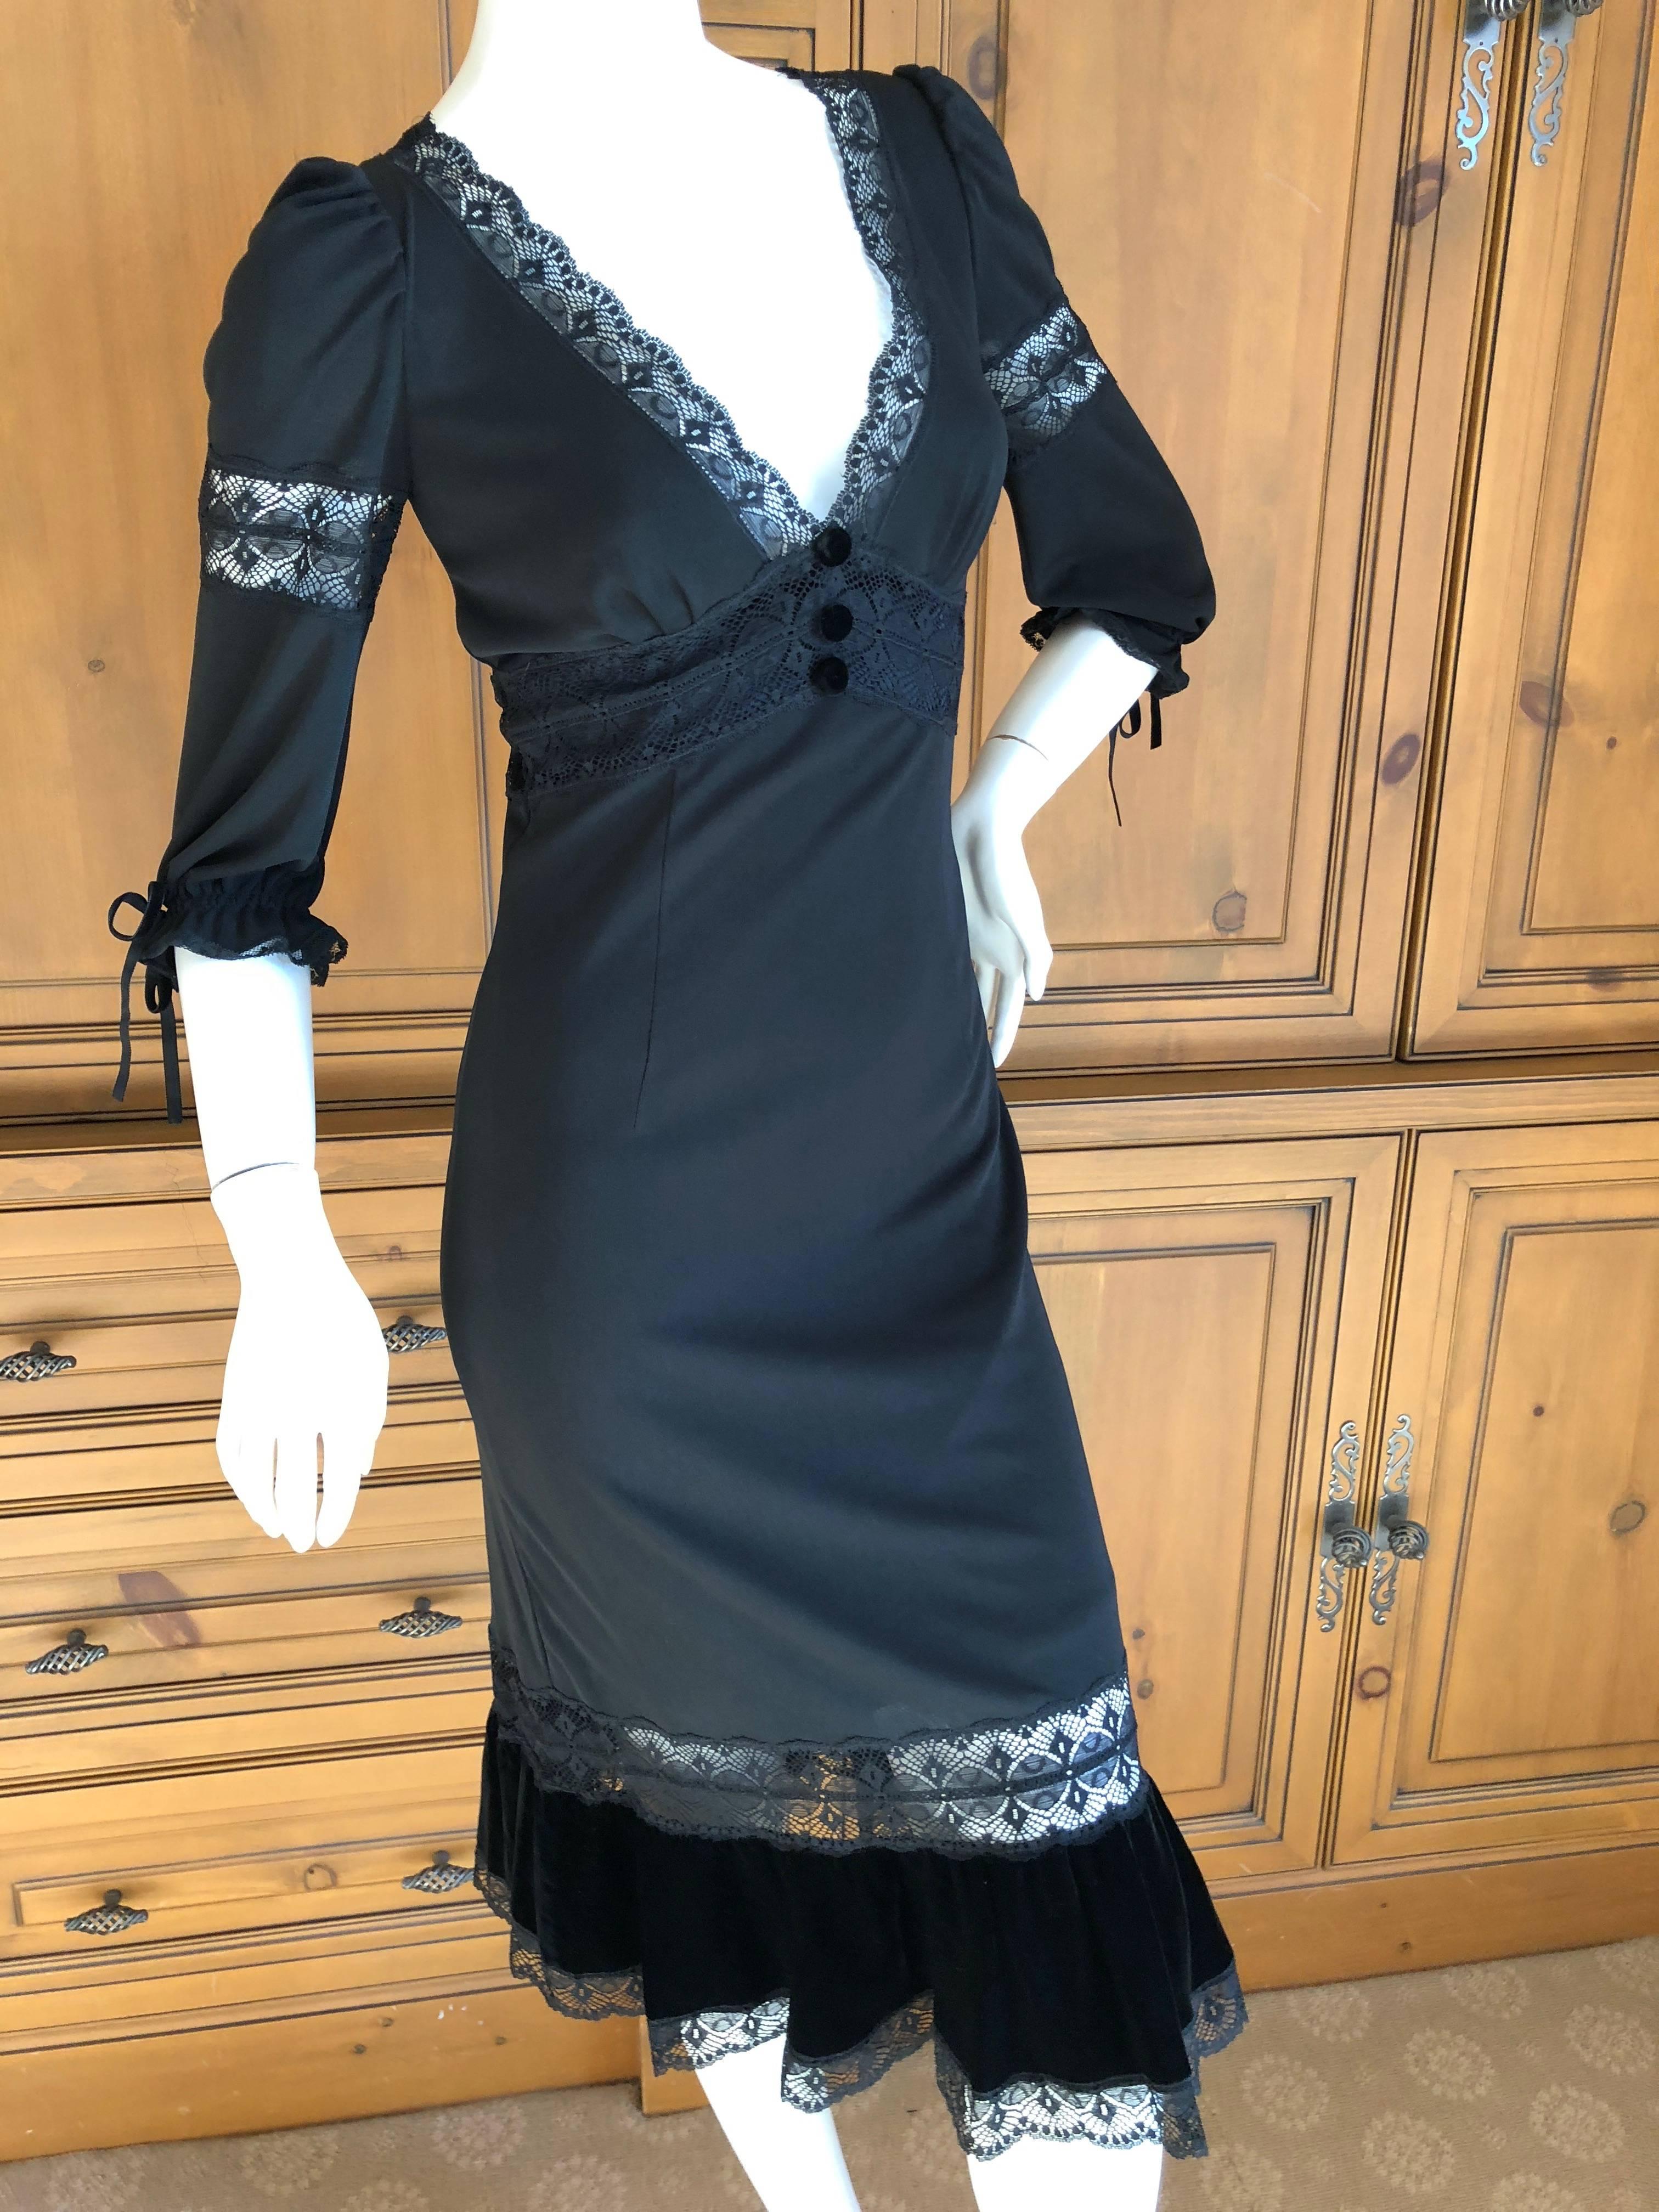 D&G Dolce & Gabbana Sheer Lace Panel Little Black Dress with Velvet Trim
Size 38
Bust 36